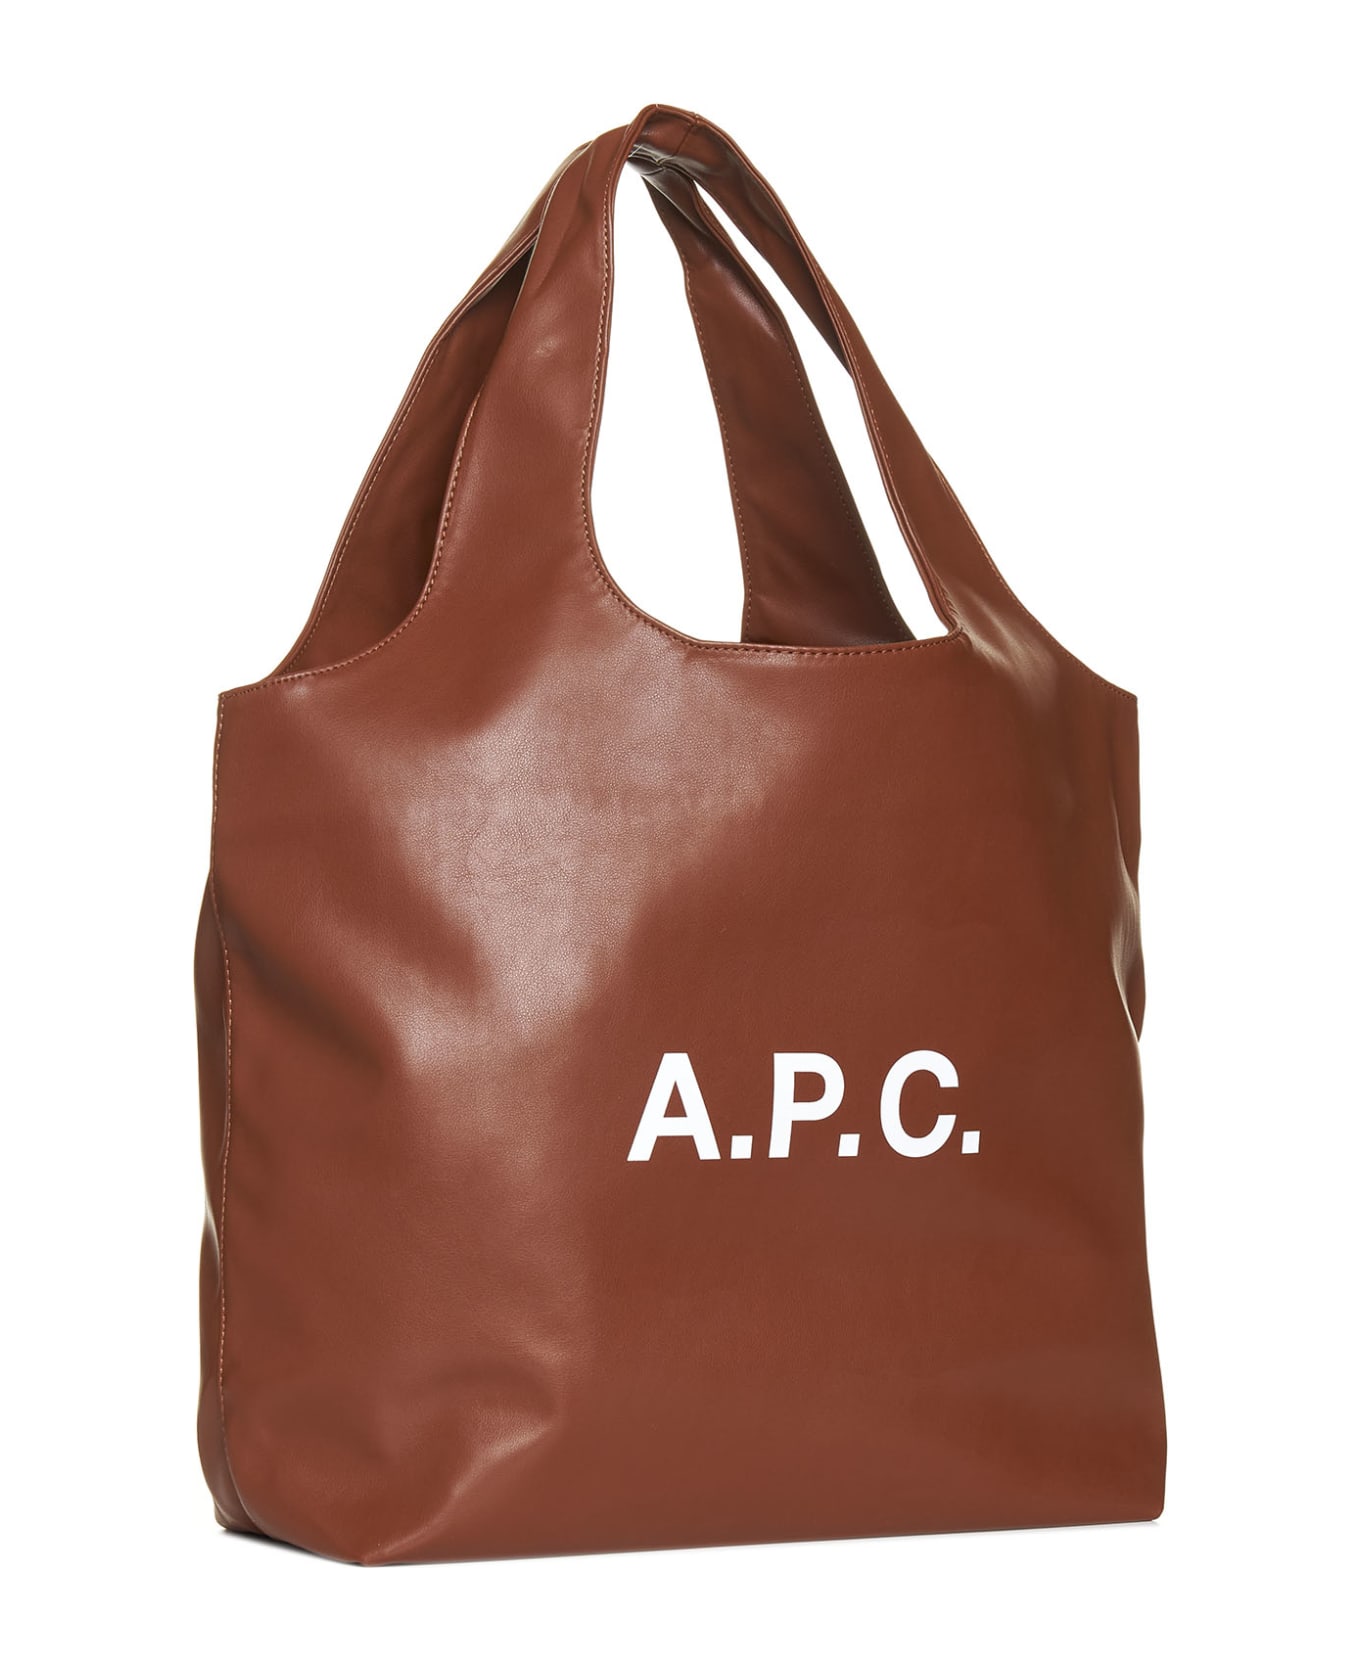 A.P.C. Ninon Tote Bag - NOISETTE